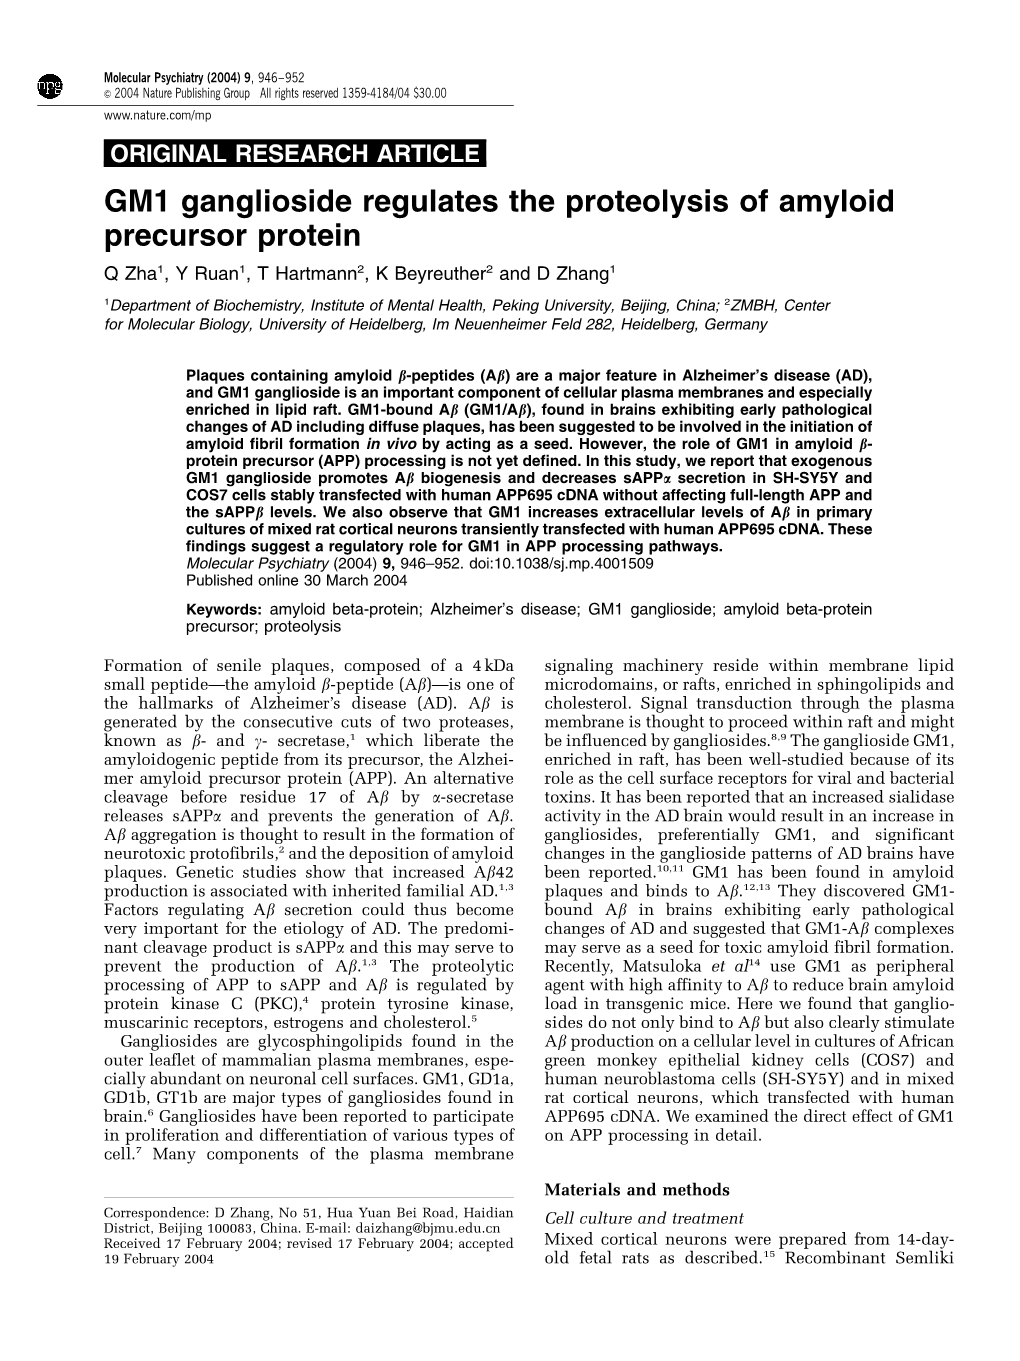 GM1 Ganglioside Regulates the Proteolysis of Amyloid Precursor